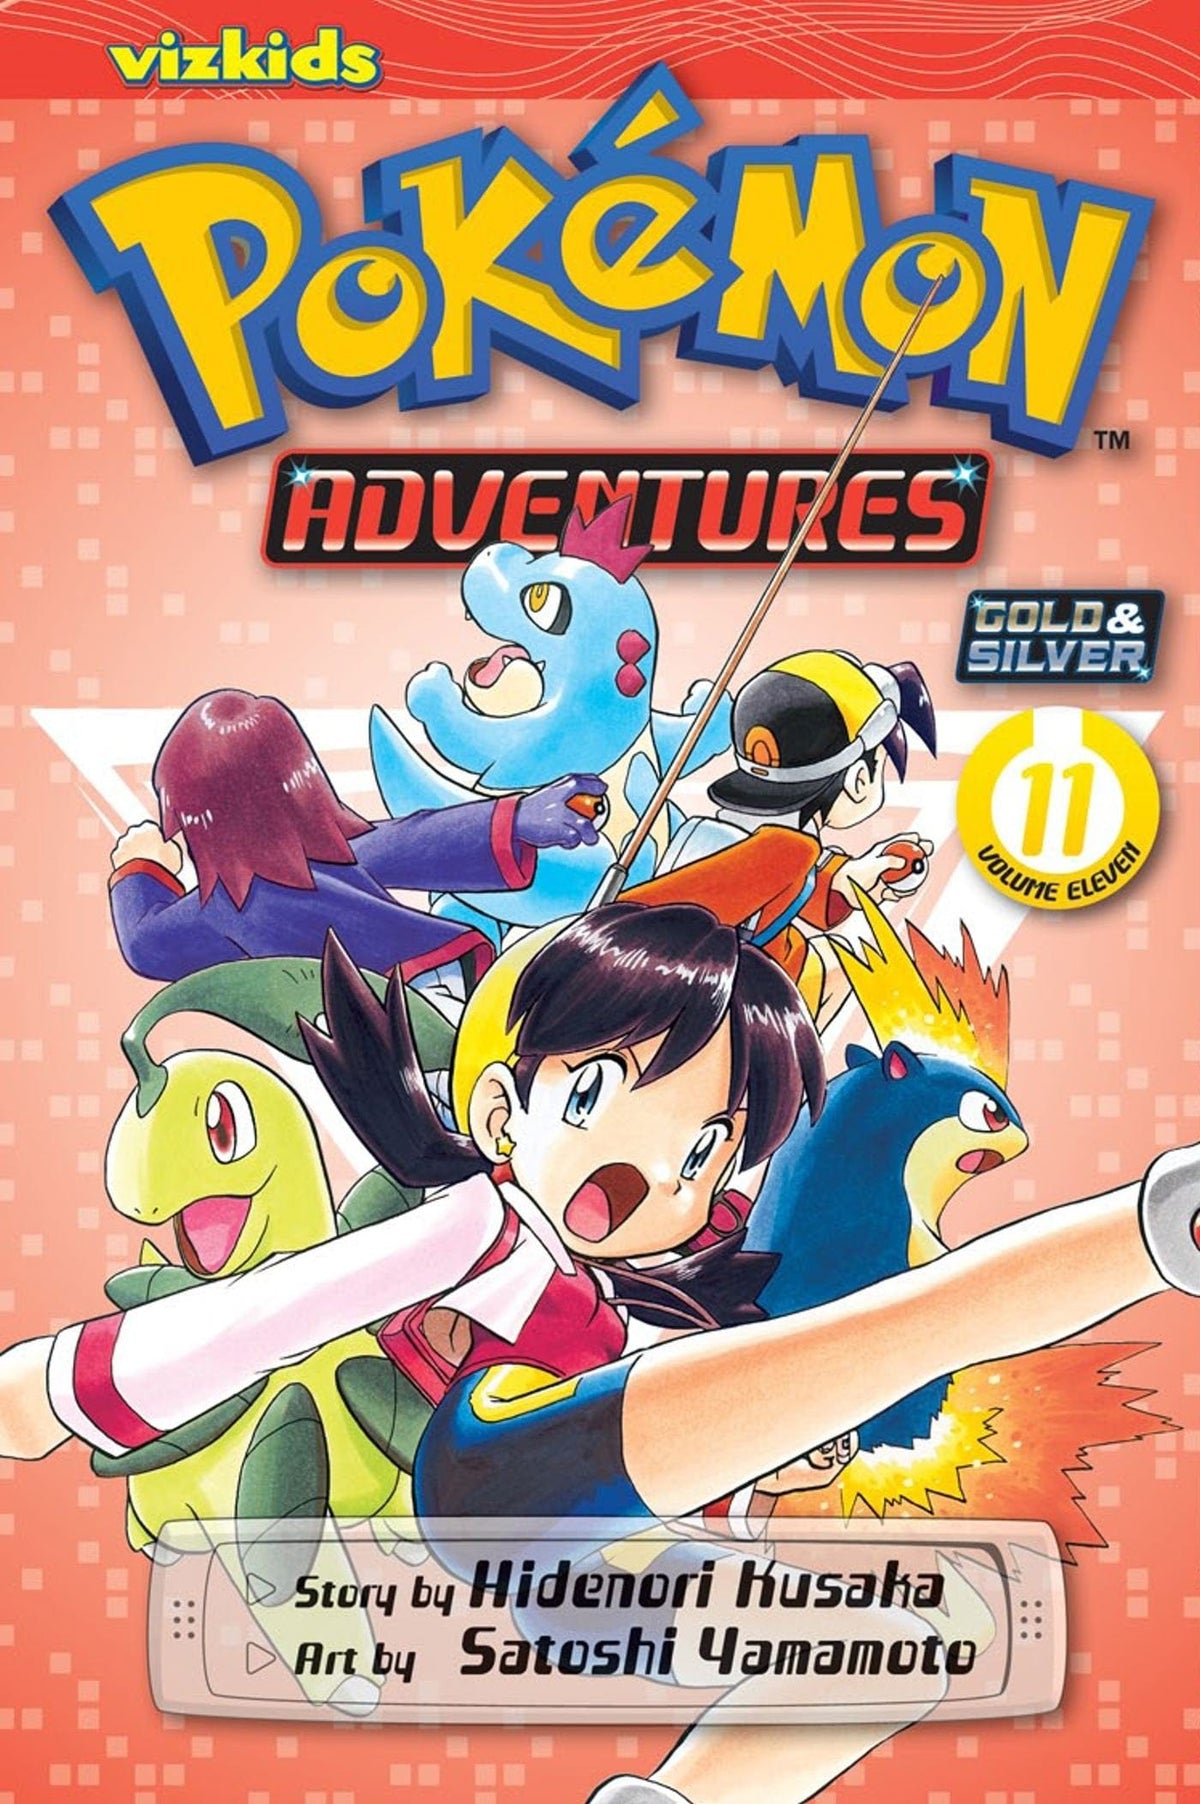 Pokemon: Adventures - Gold & Silver Vol. 11 - Third Eye